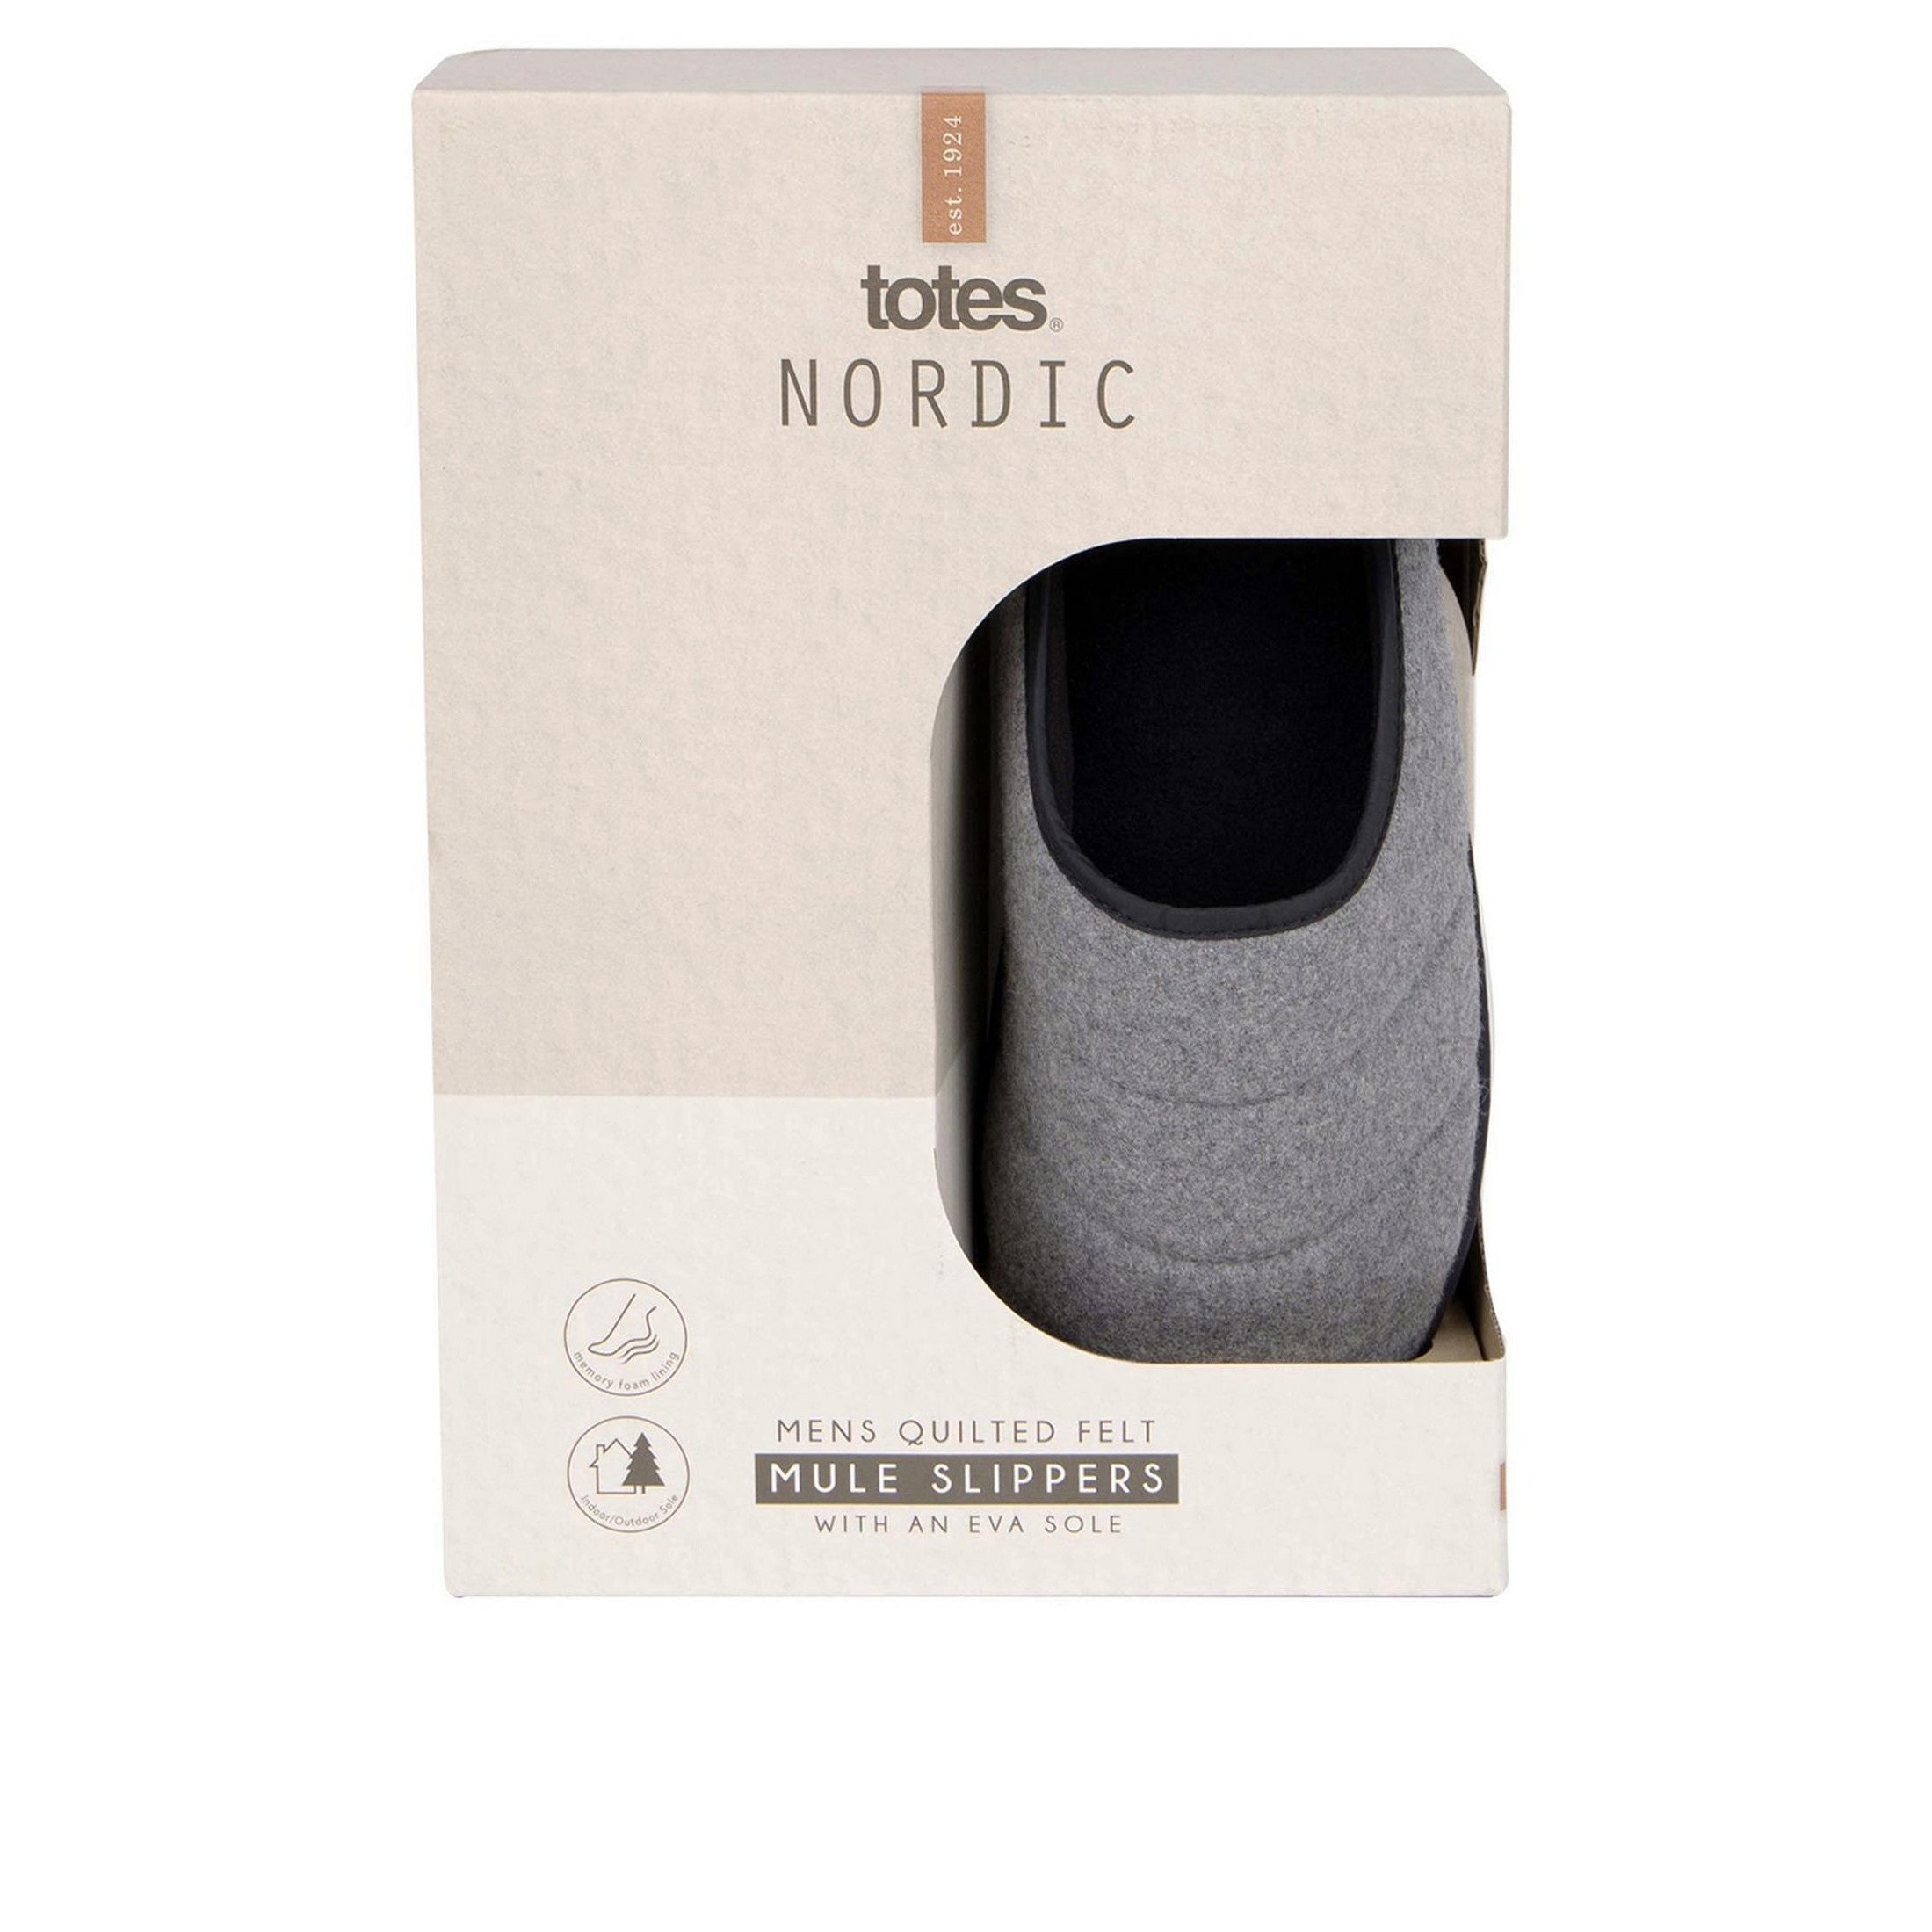 Totes Nordic Felt Mule Slippers - Multi - Size 9